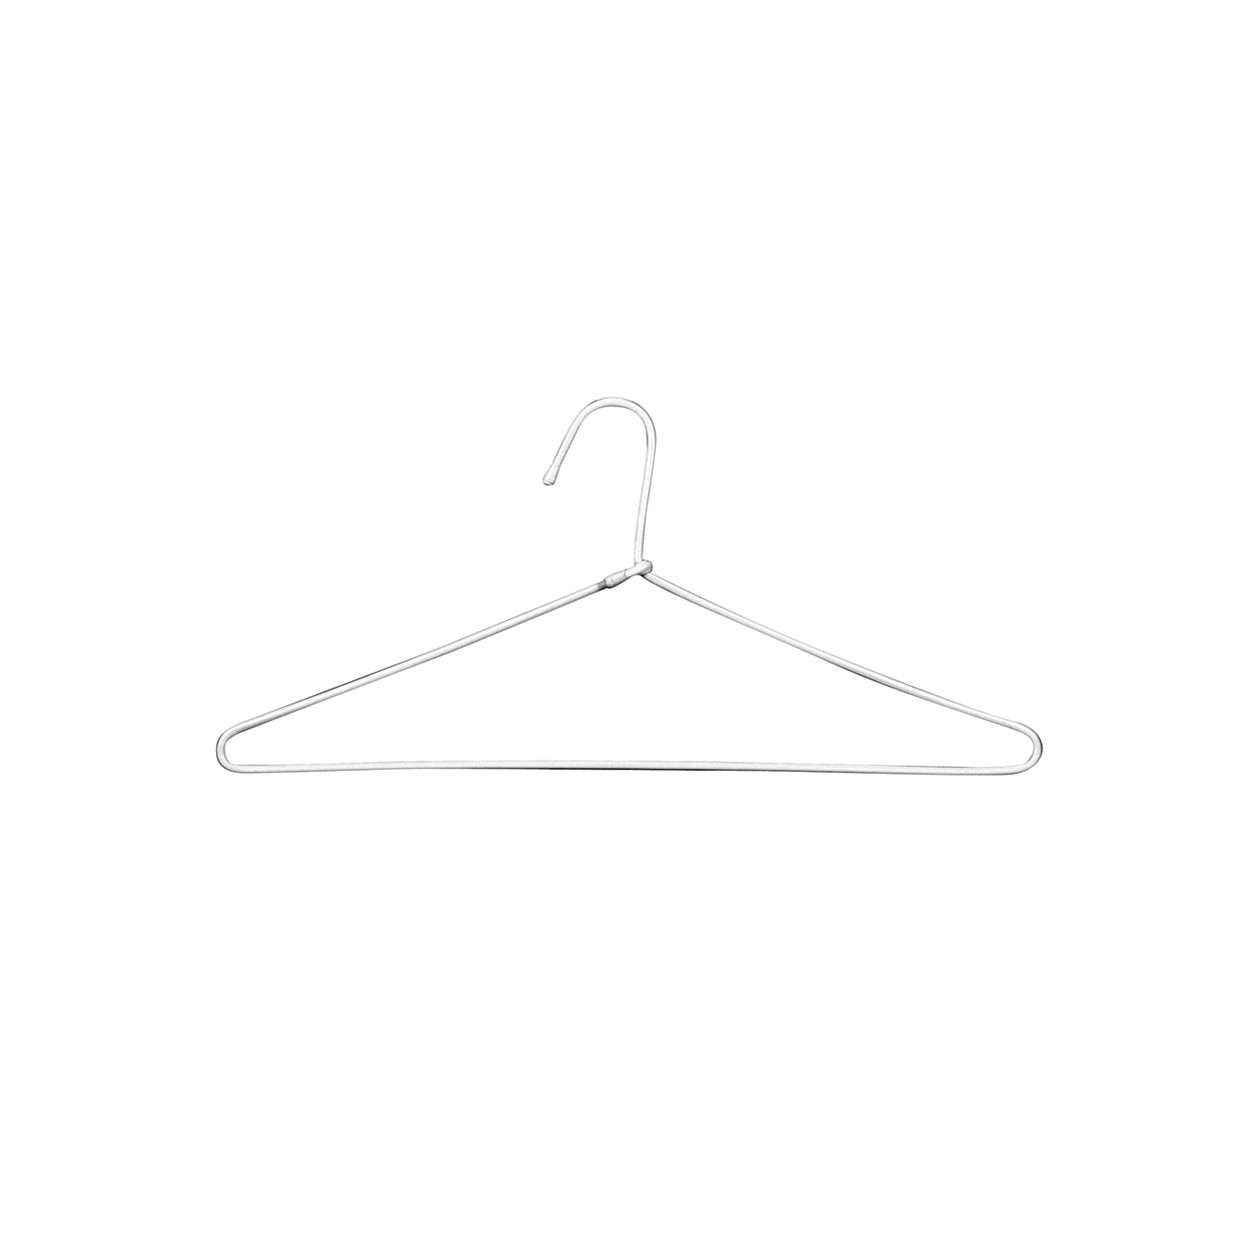 https://shopbasics.com.au/6295/hanger-wire-plastic-coated-405w-wh.jpg